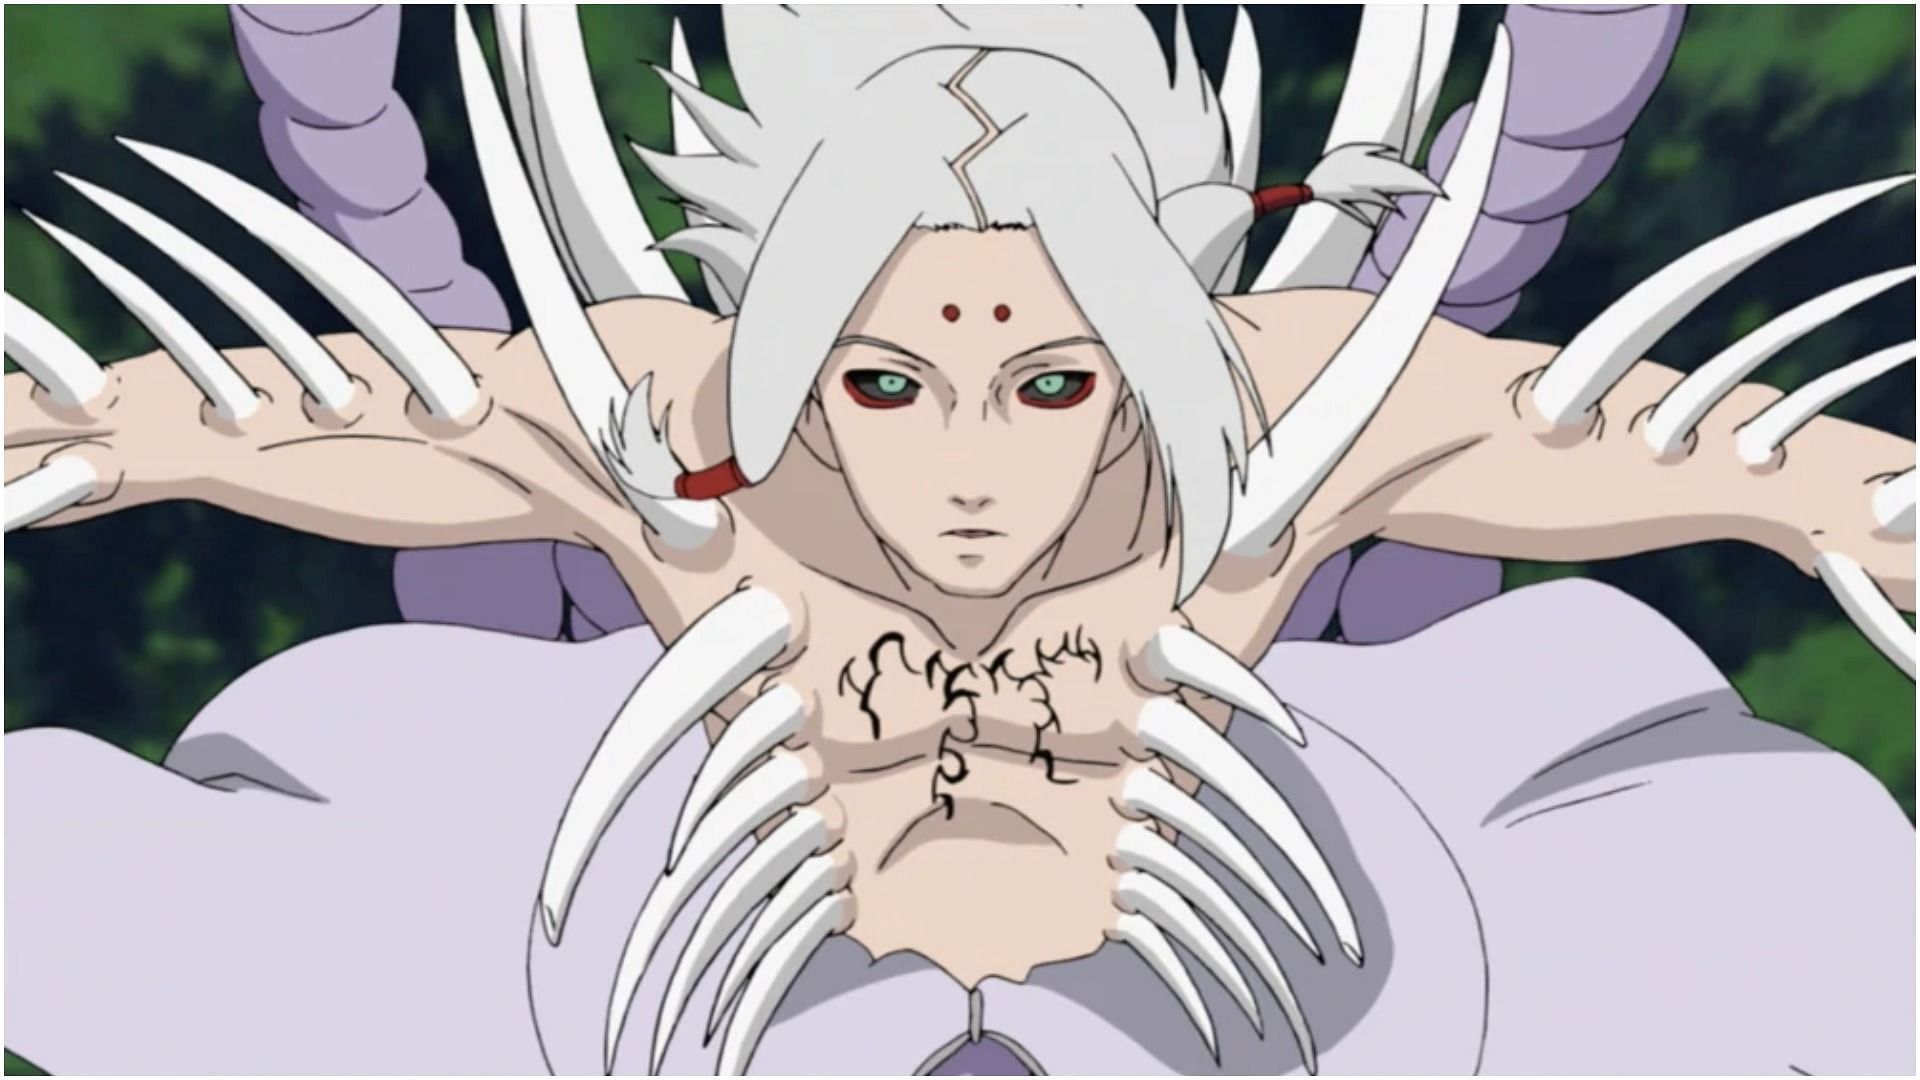 Kimimaro as seen in the anime Naruto (Image via Studio Pierrot)